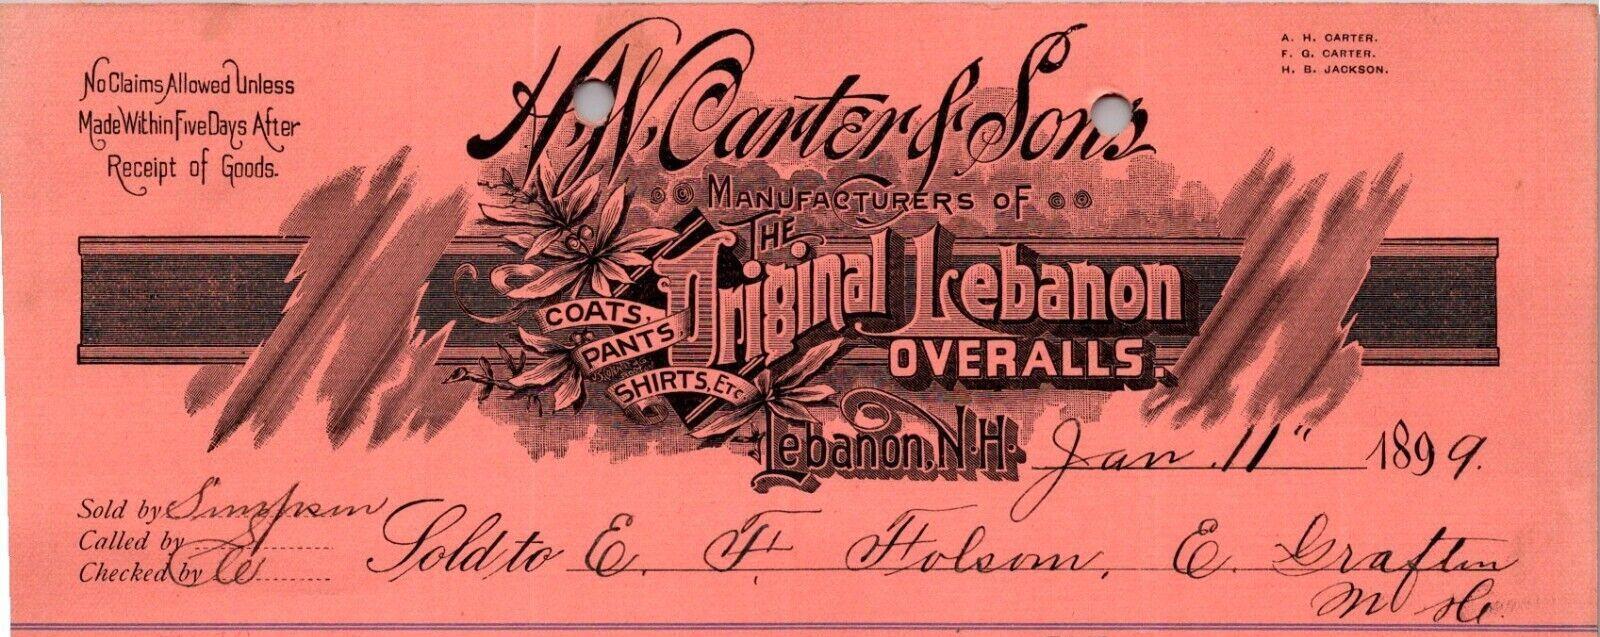 1899 H W CARTER SONS COATS PANTS SHIRTS LEBANON OVERALLS MFR LEBANON NH CV212